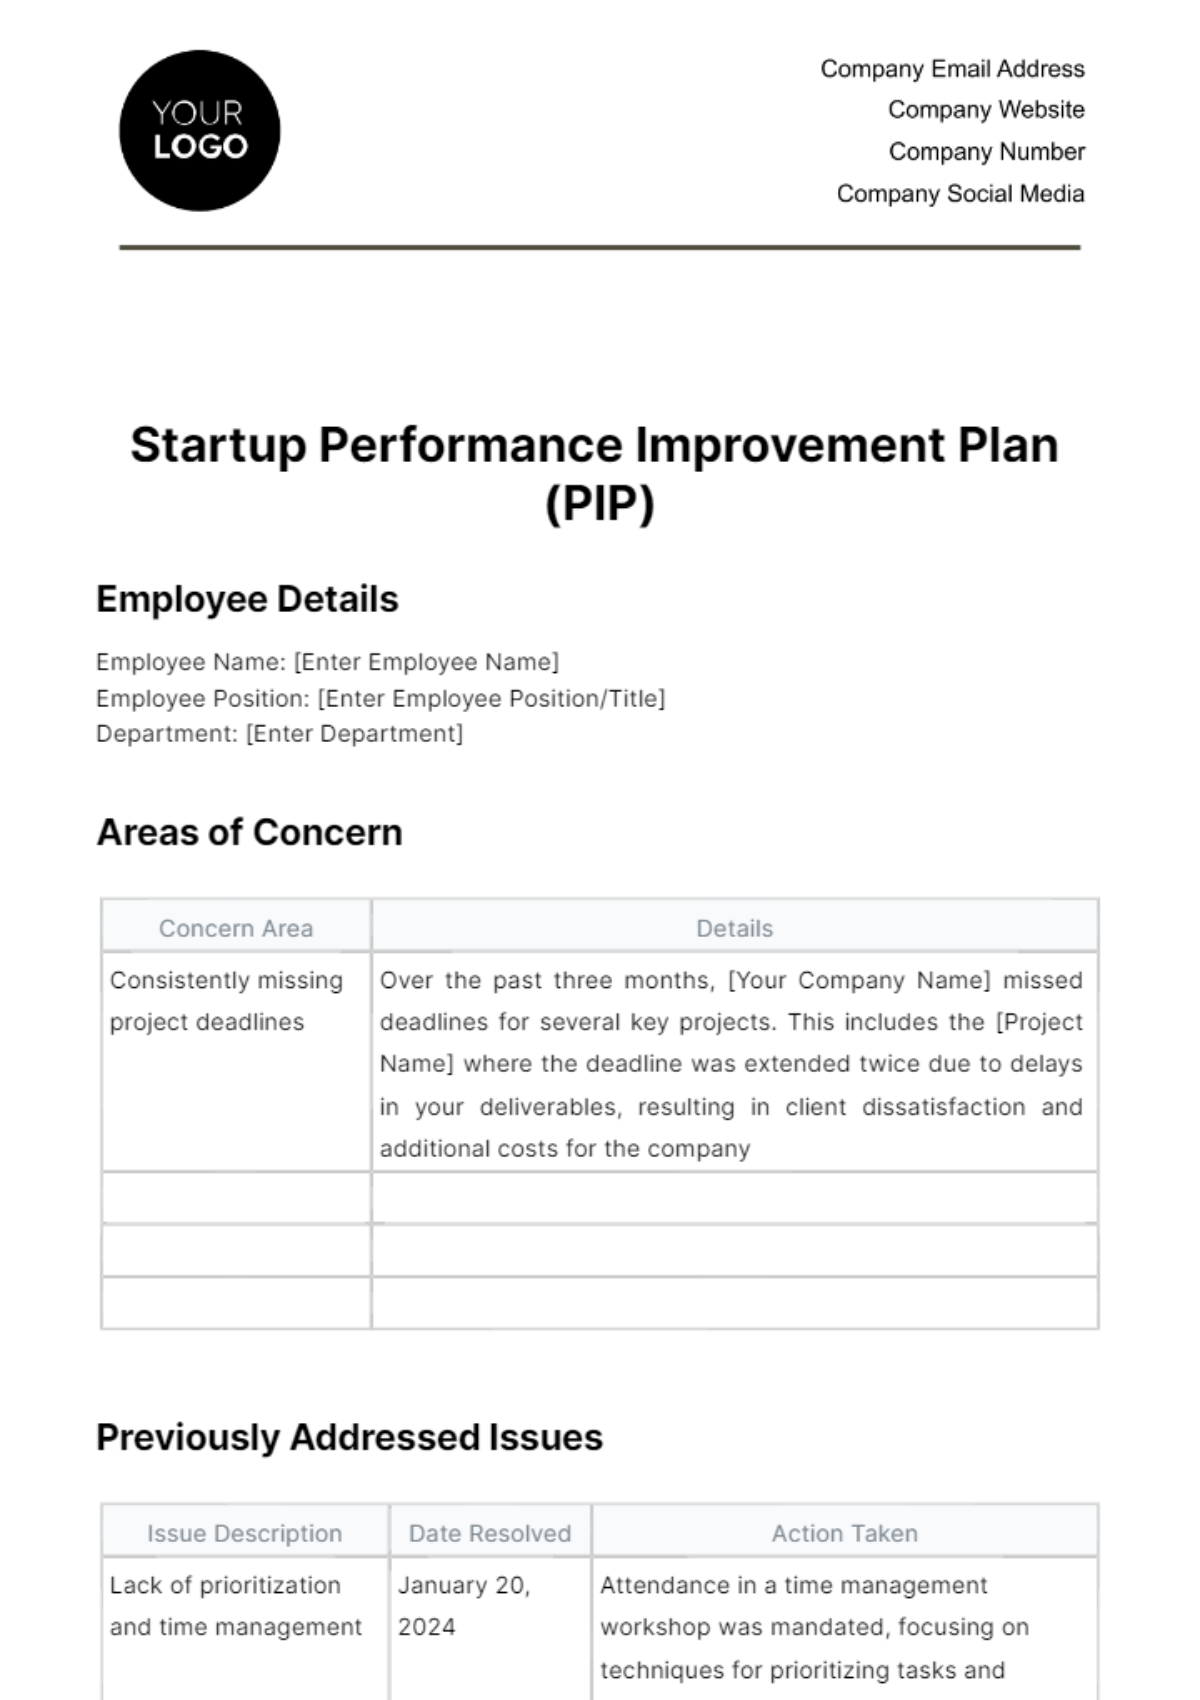 Free Startup Performance Improvement Plan (PIP) Template